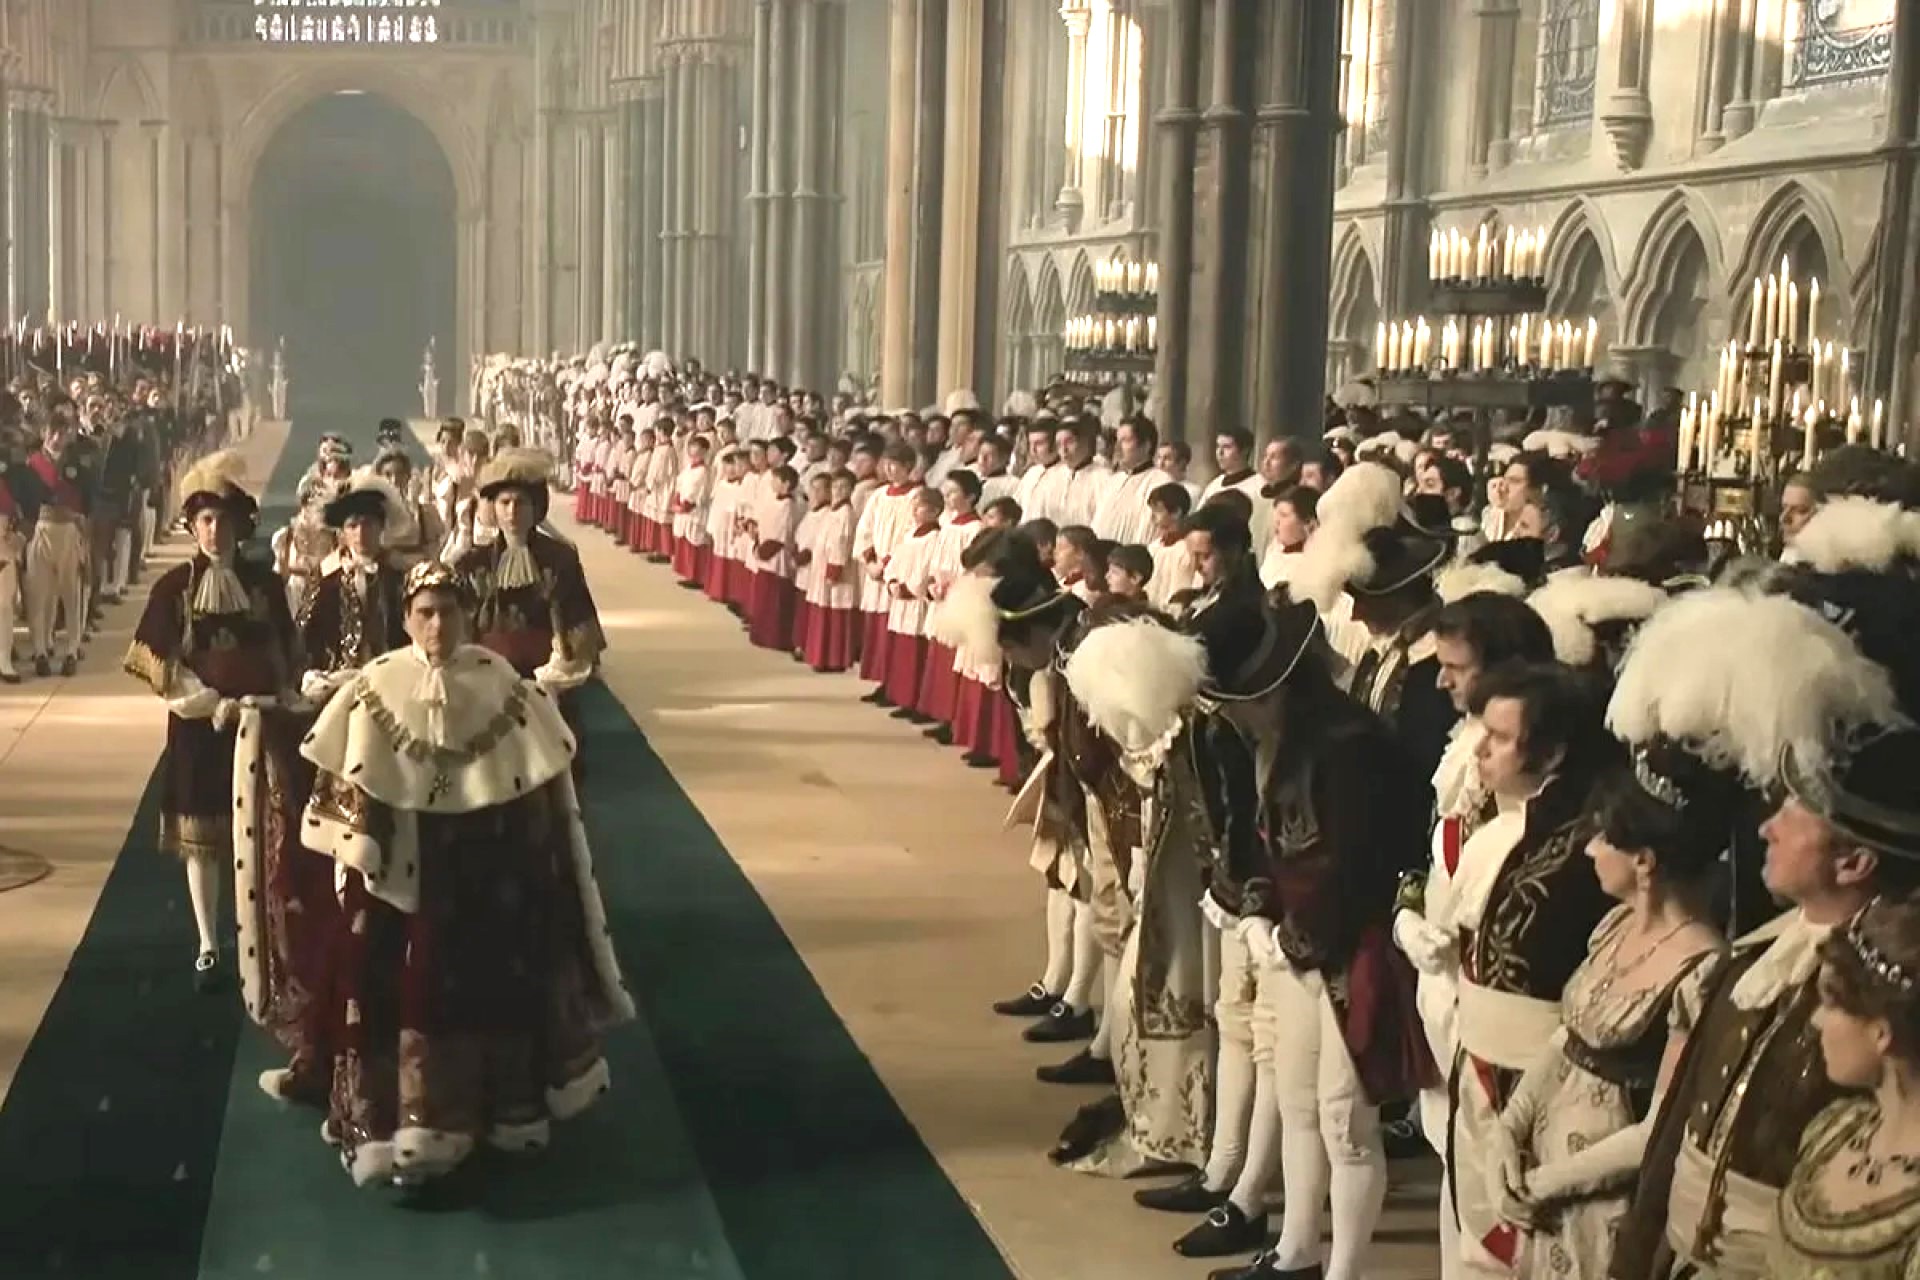 Napoleon's coronation: not what it seemed